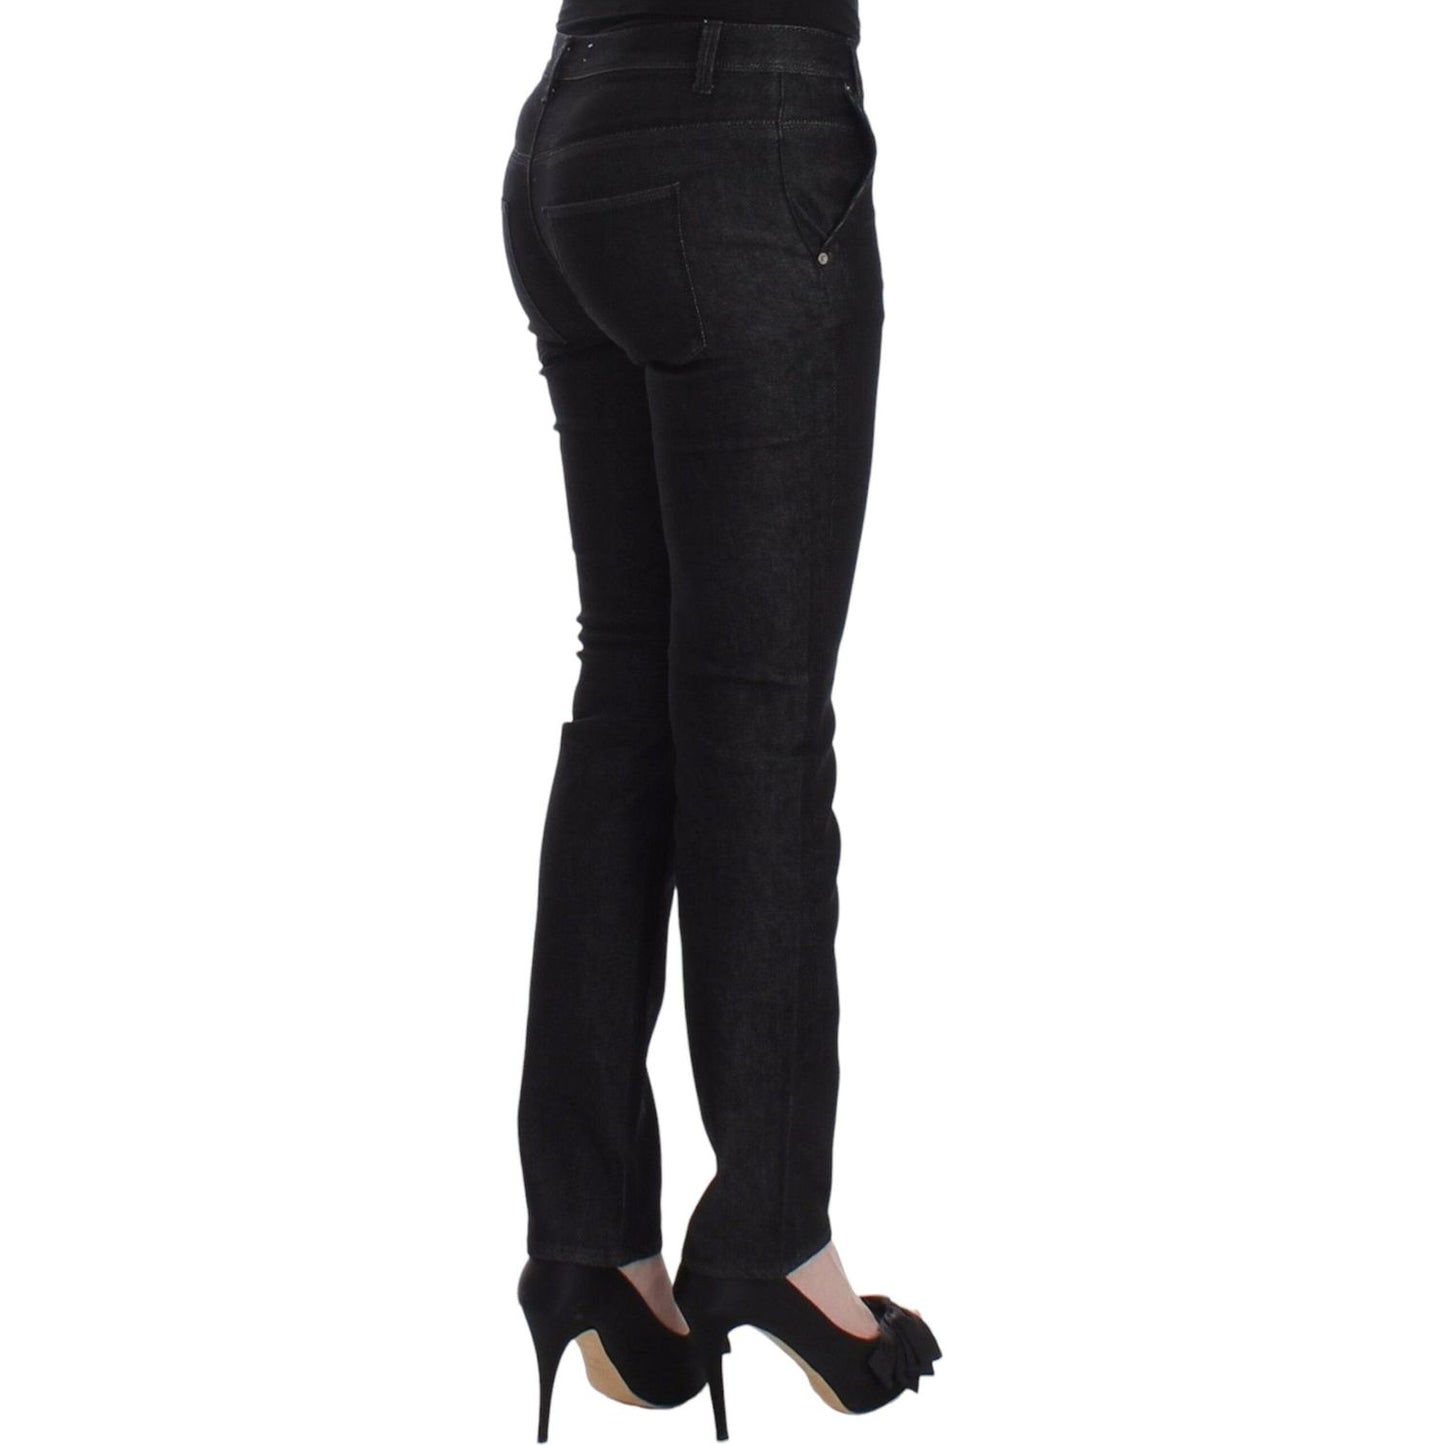 Ermanno Scervino Chic Black Skinny Jeans - Elegant & Slim Fit Jeans & Pants black-slim-jeans-denim-pants-skinny-leg-stretch